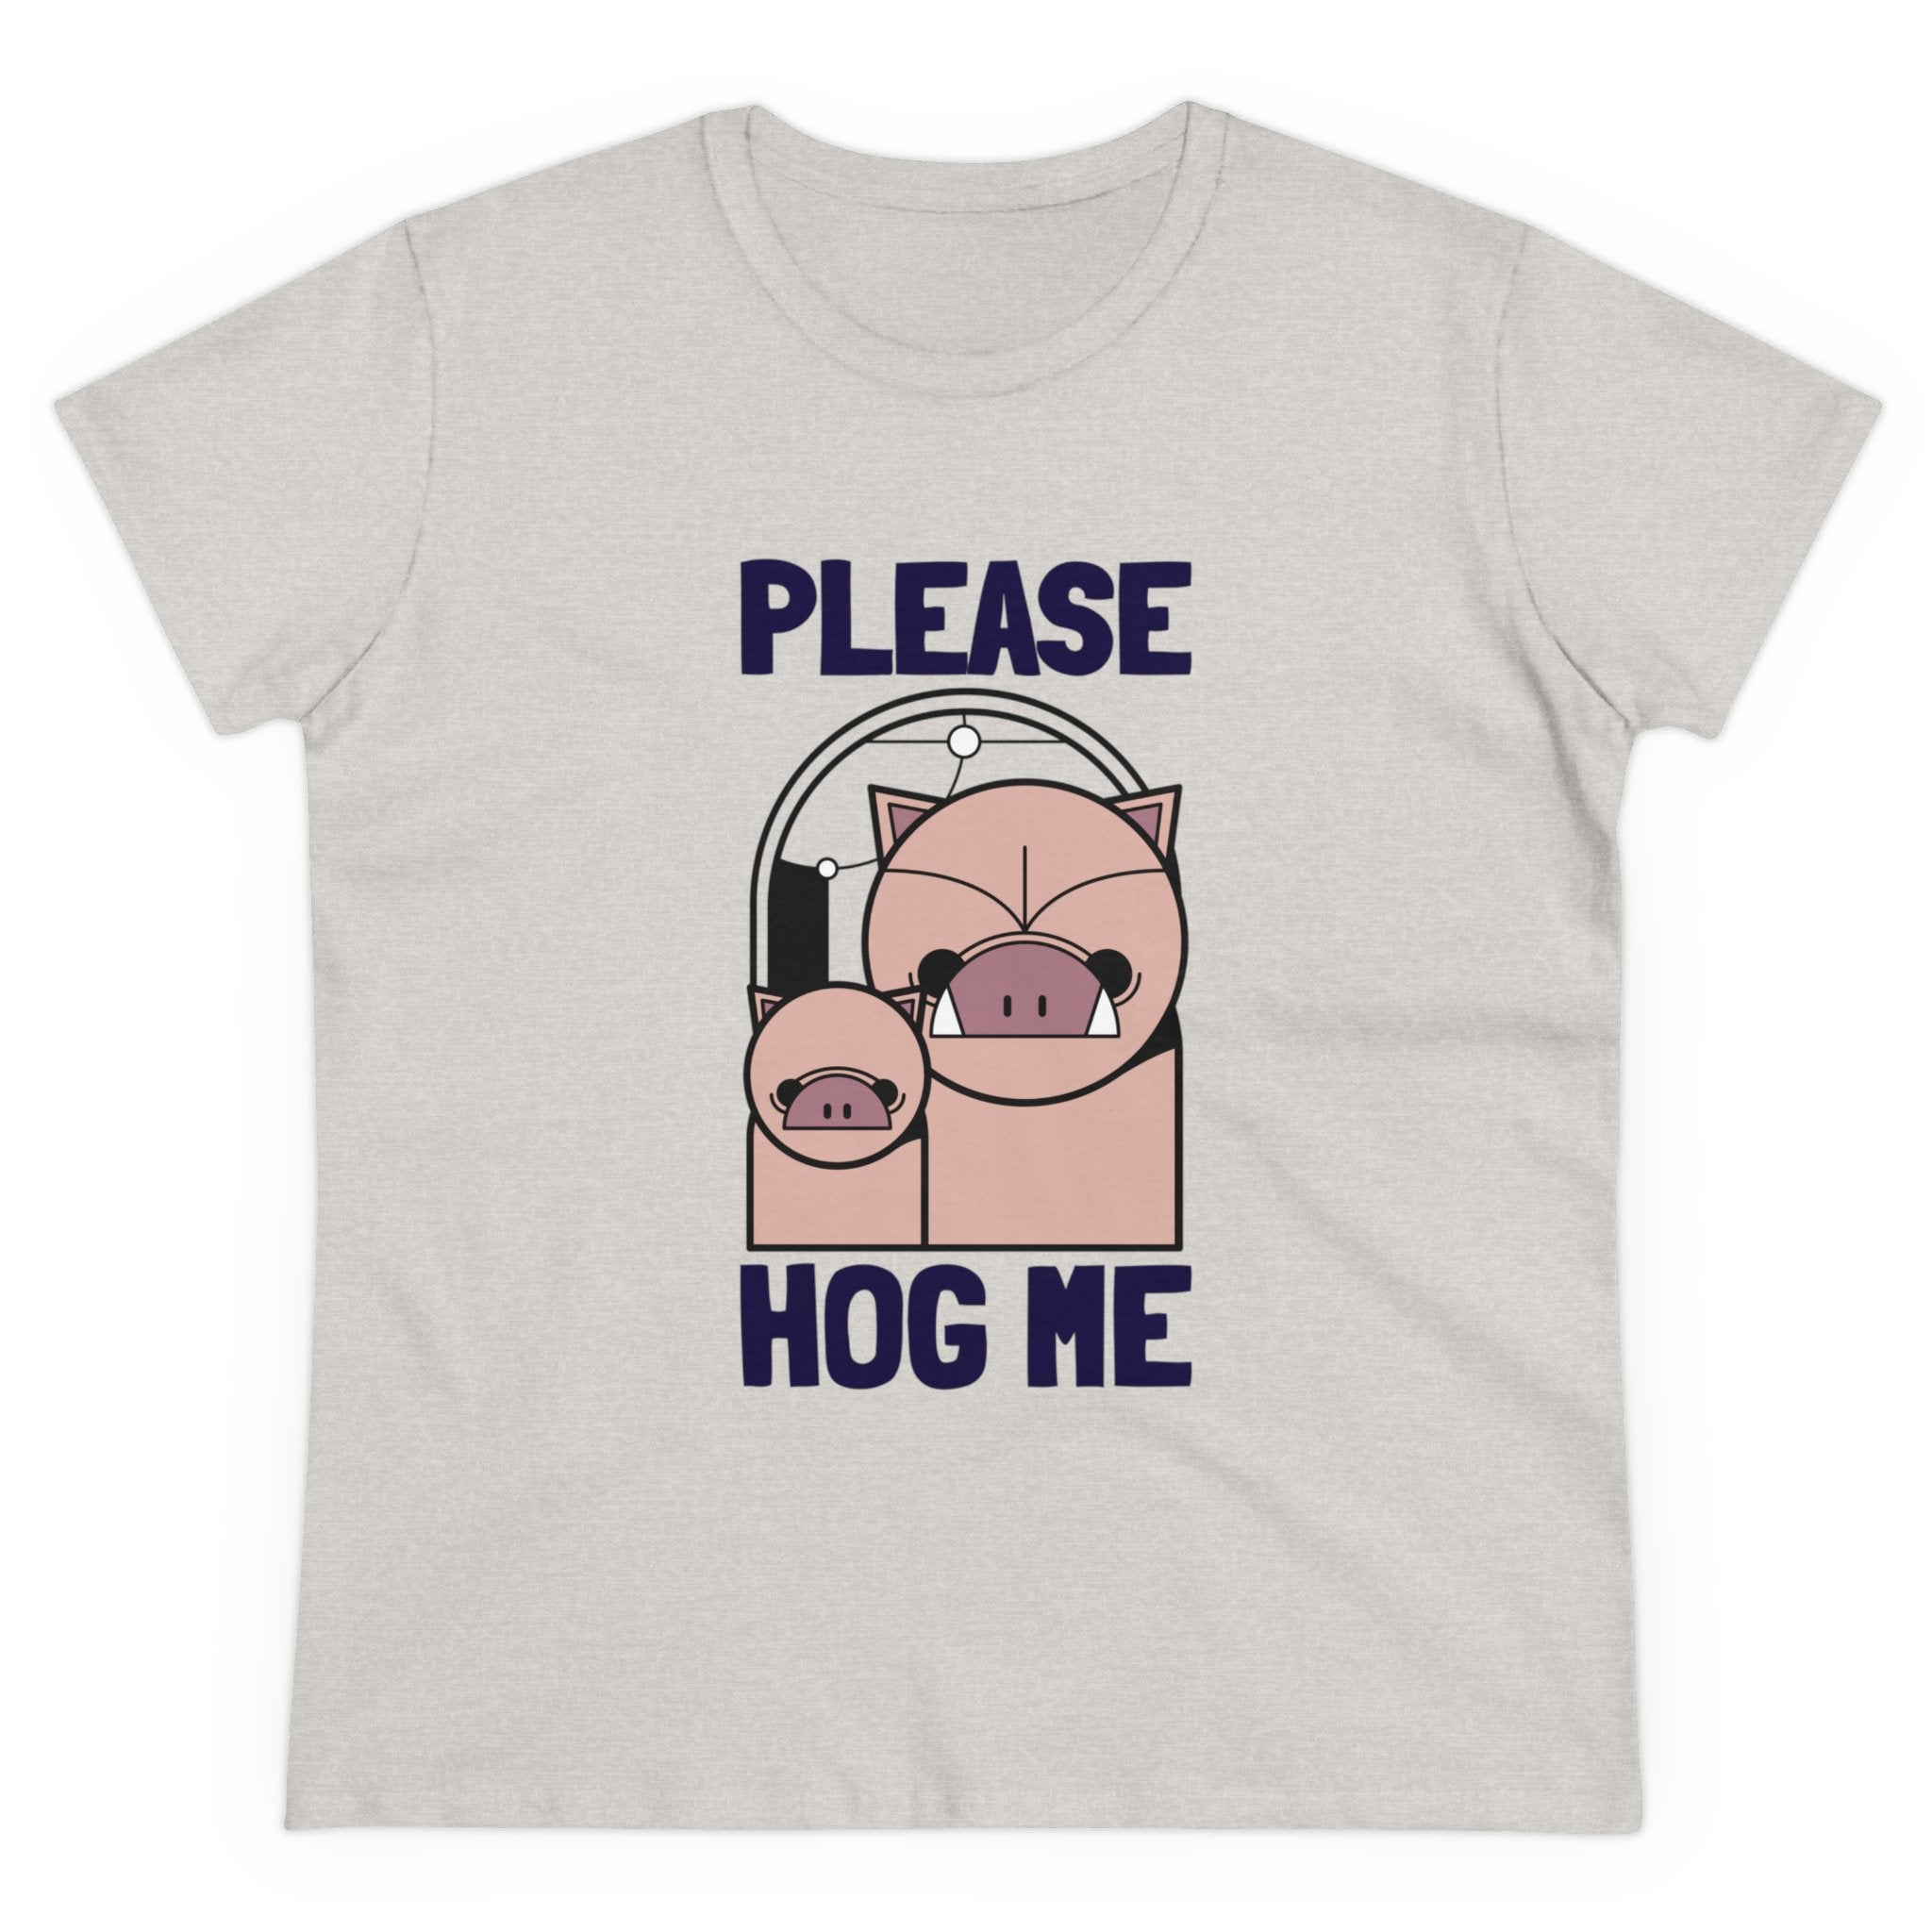 Please Hog Me - Women's Tee